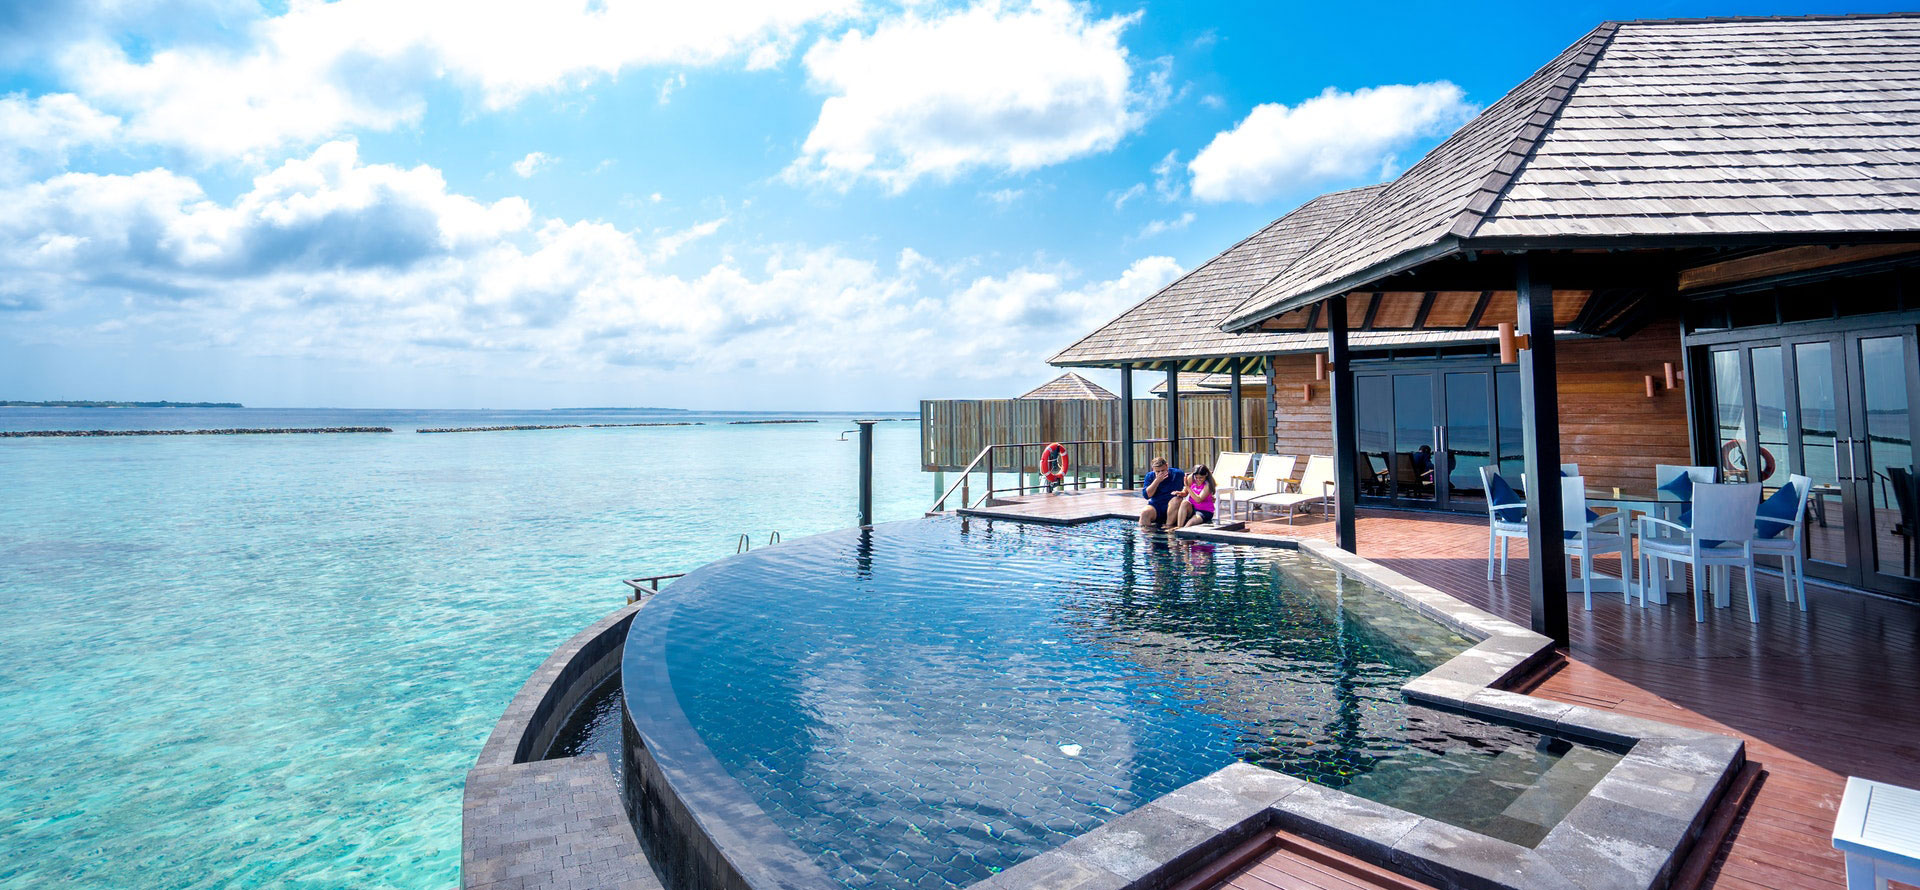 Bali resort on water.